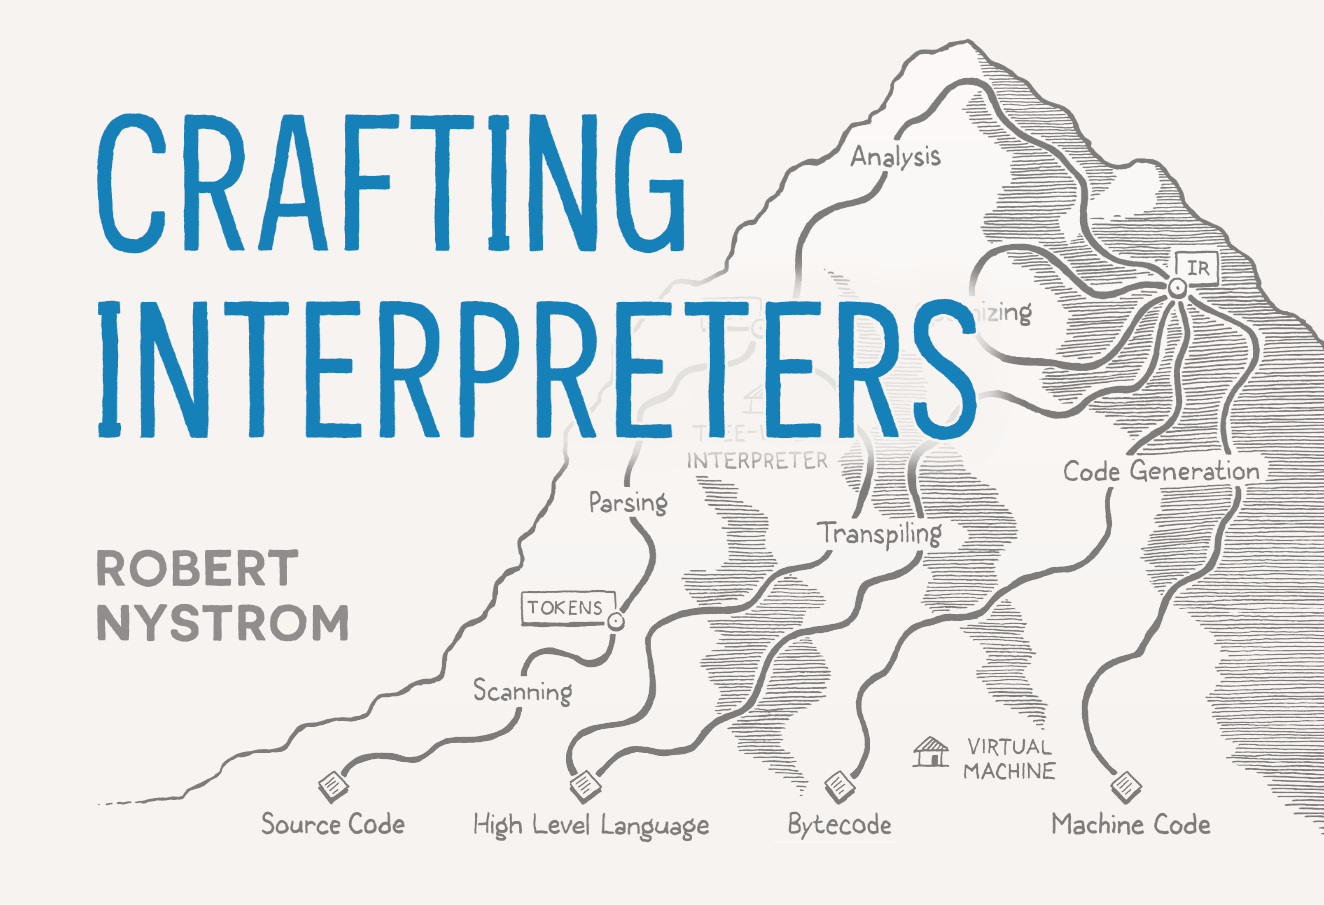 Crafting Interpreters by Robert Nystrom